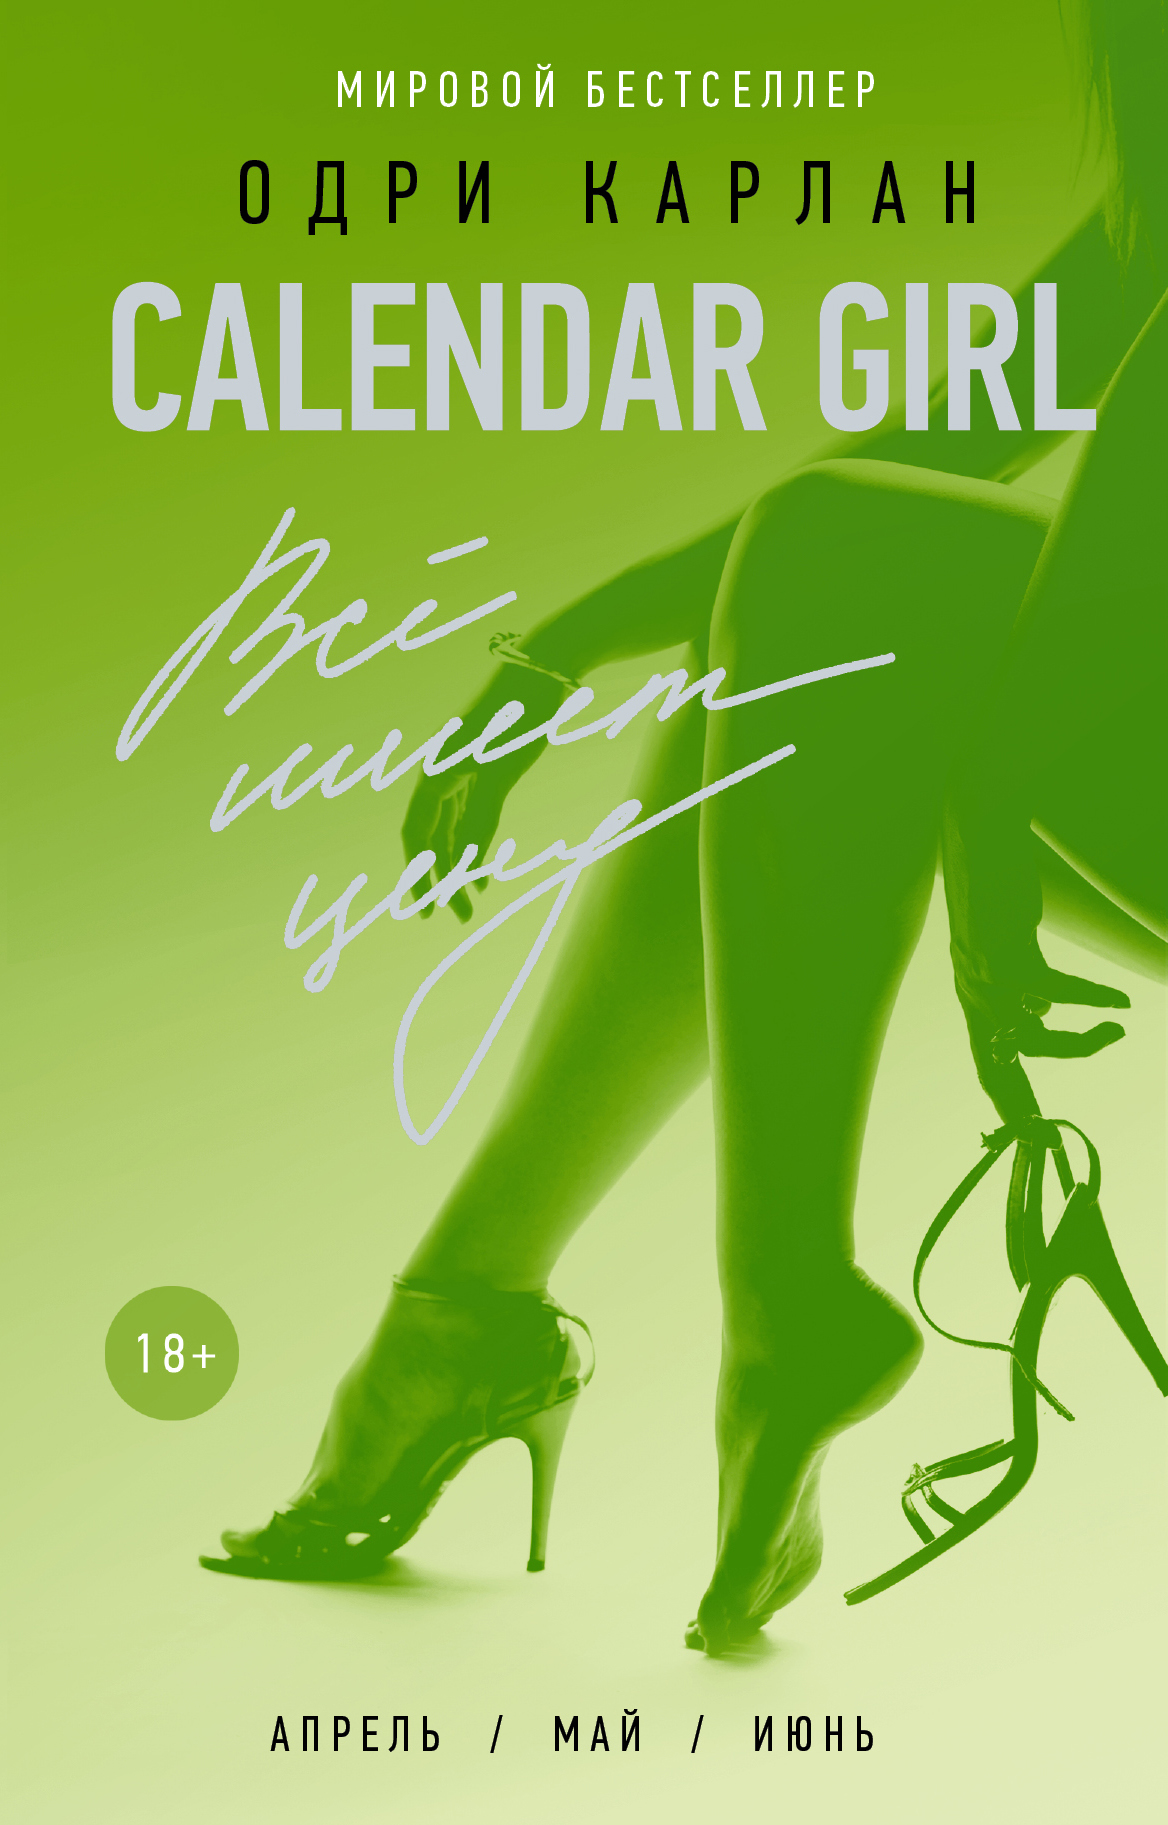 Calendar Girl.Всё имеет цену